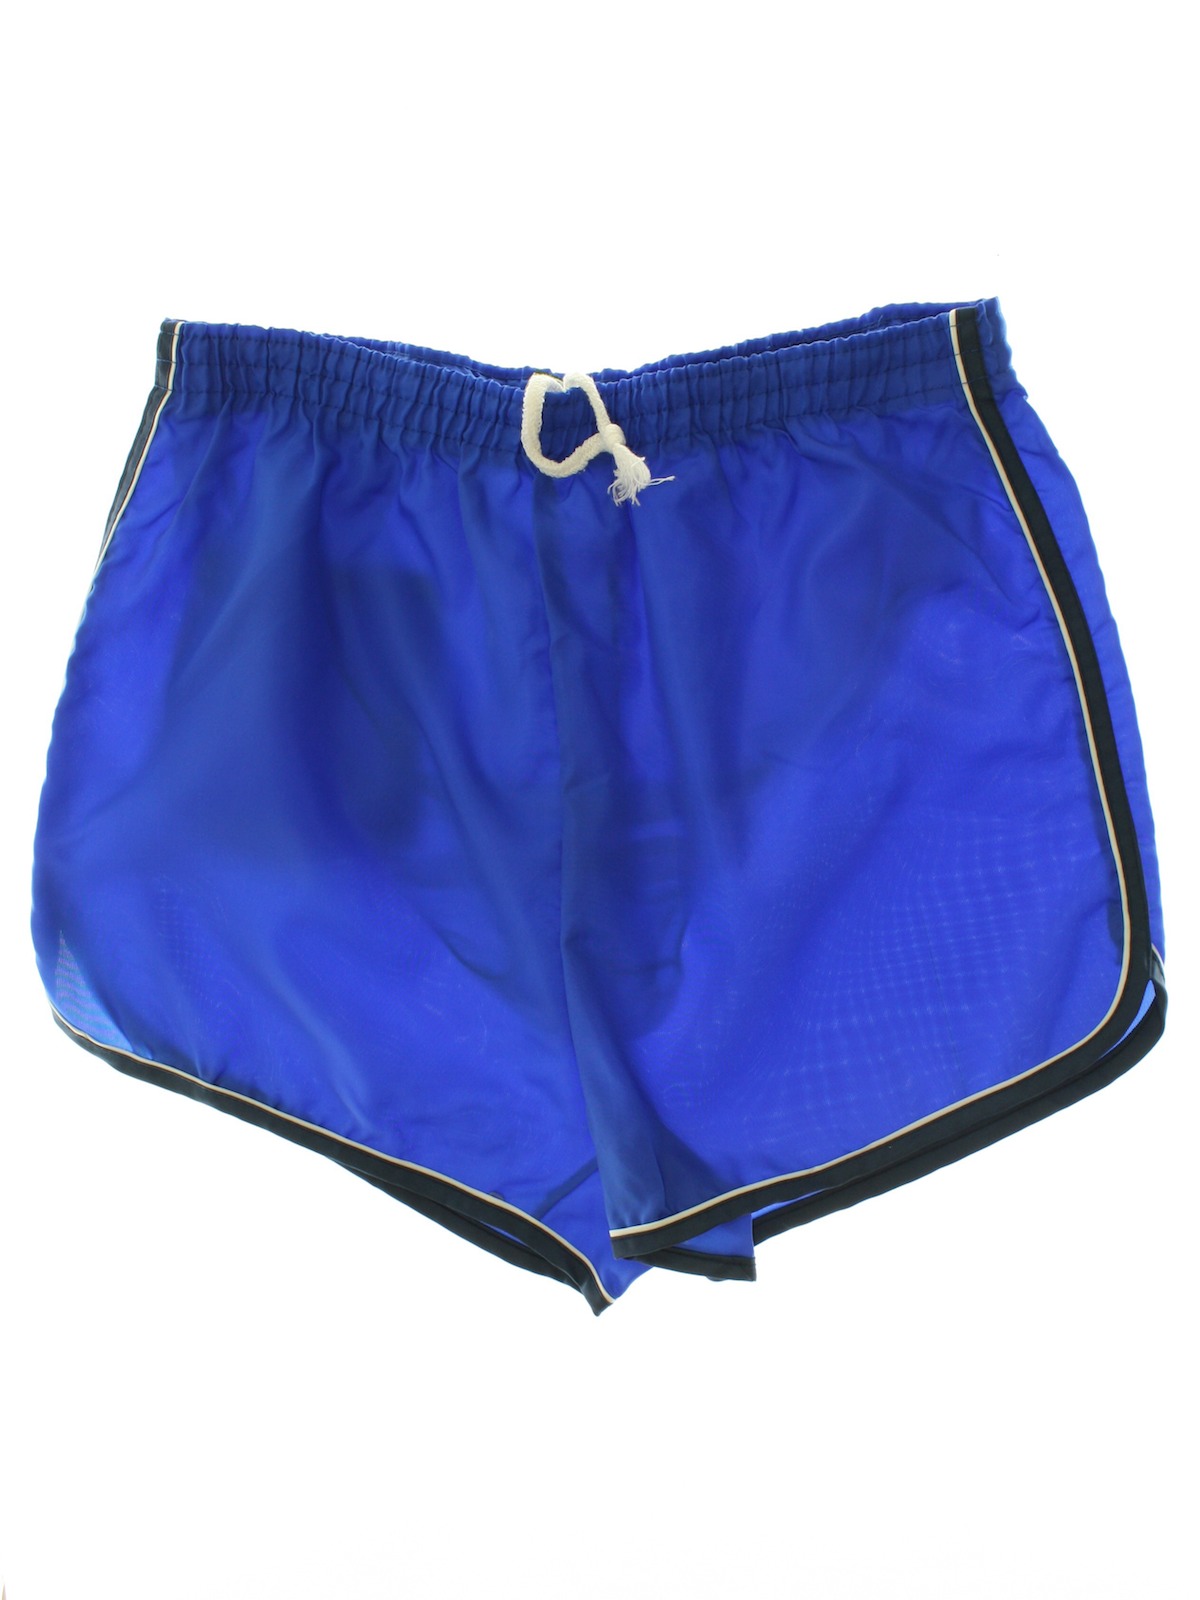 Vintage 1980's Swimsuit/Swimwear: 80s -Haband- Mens blue background ...